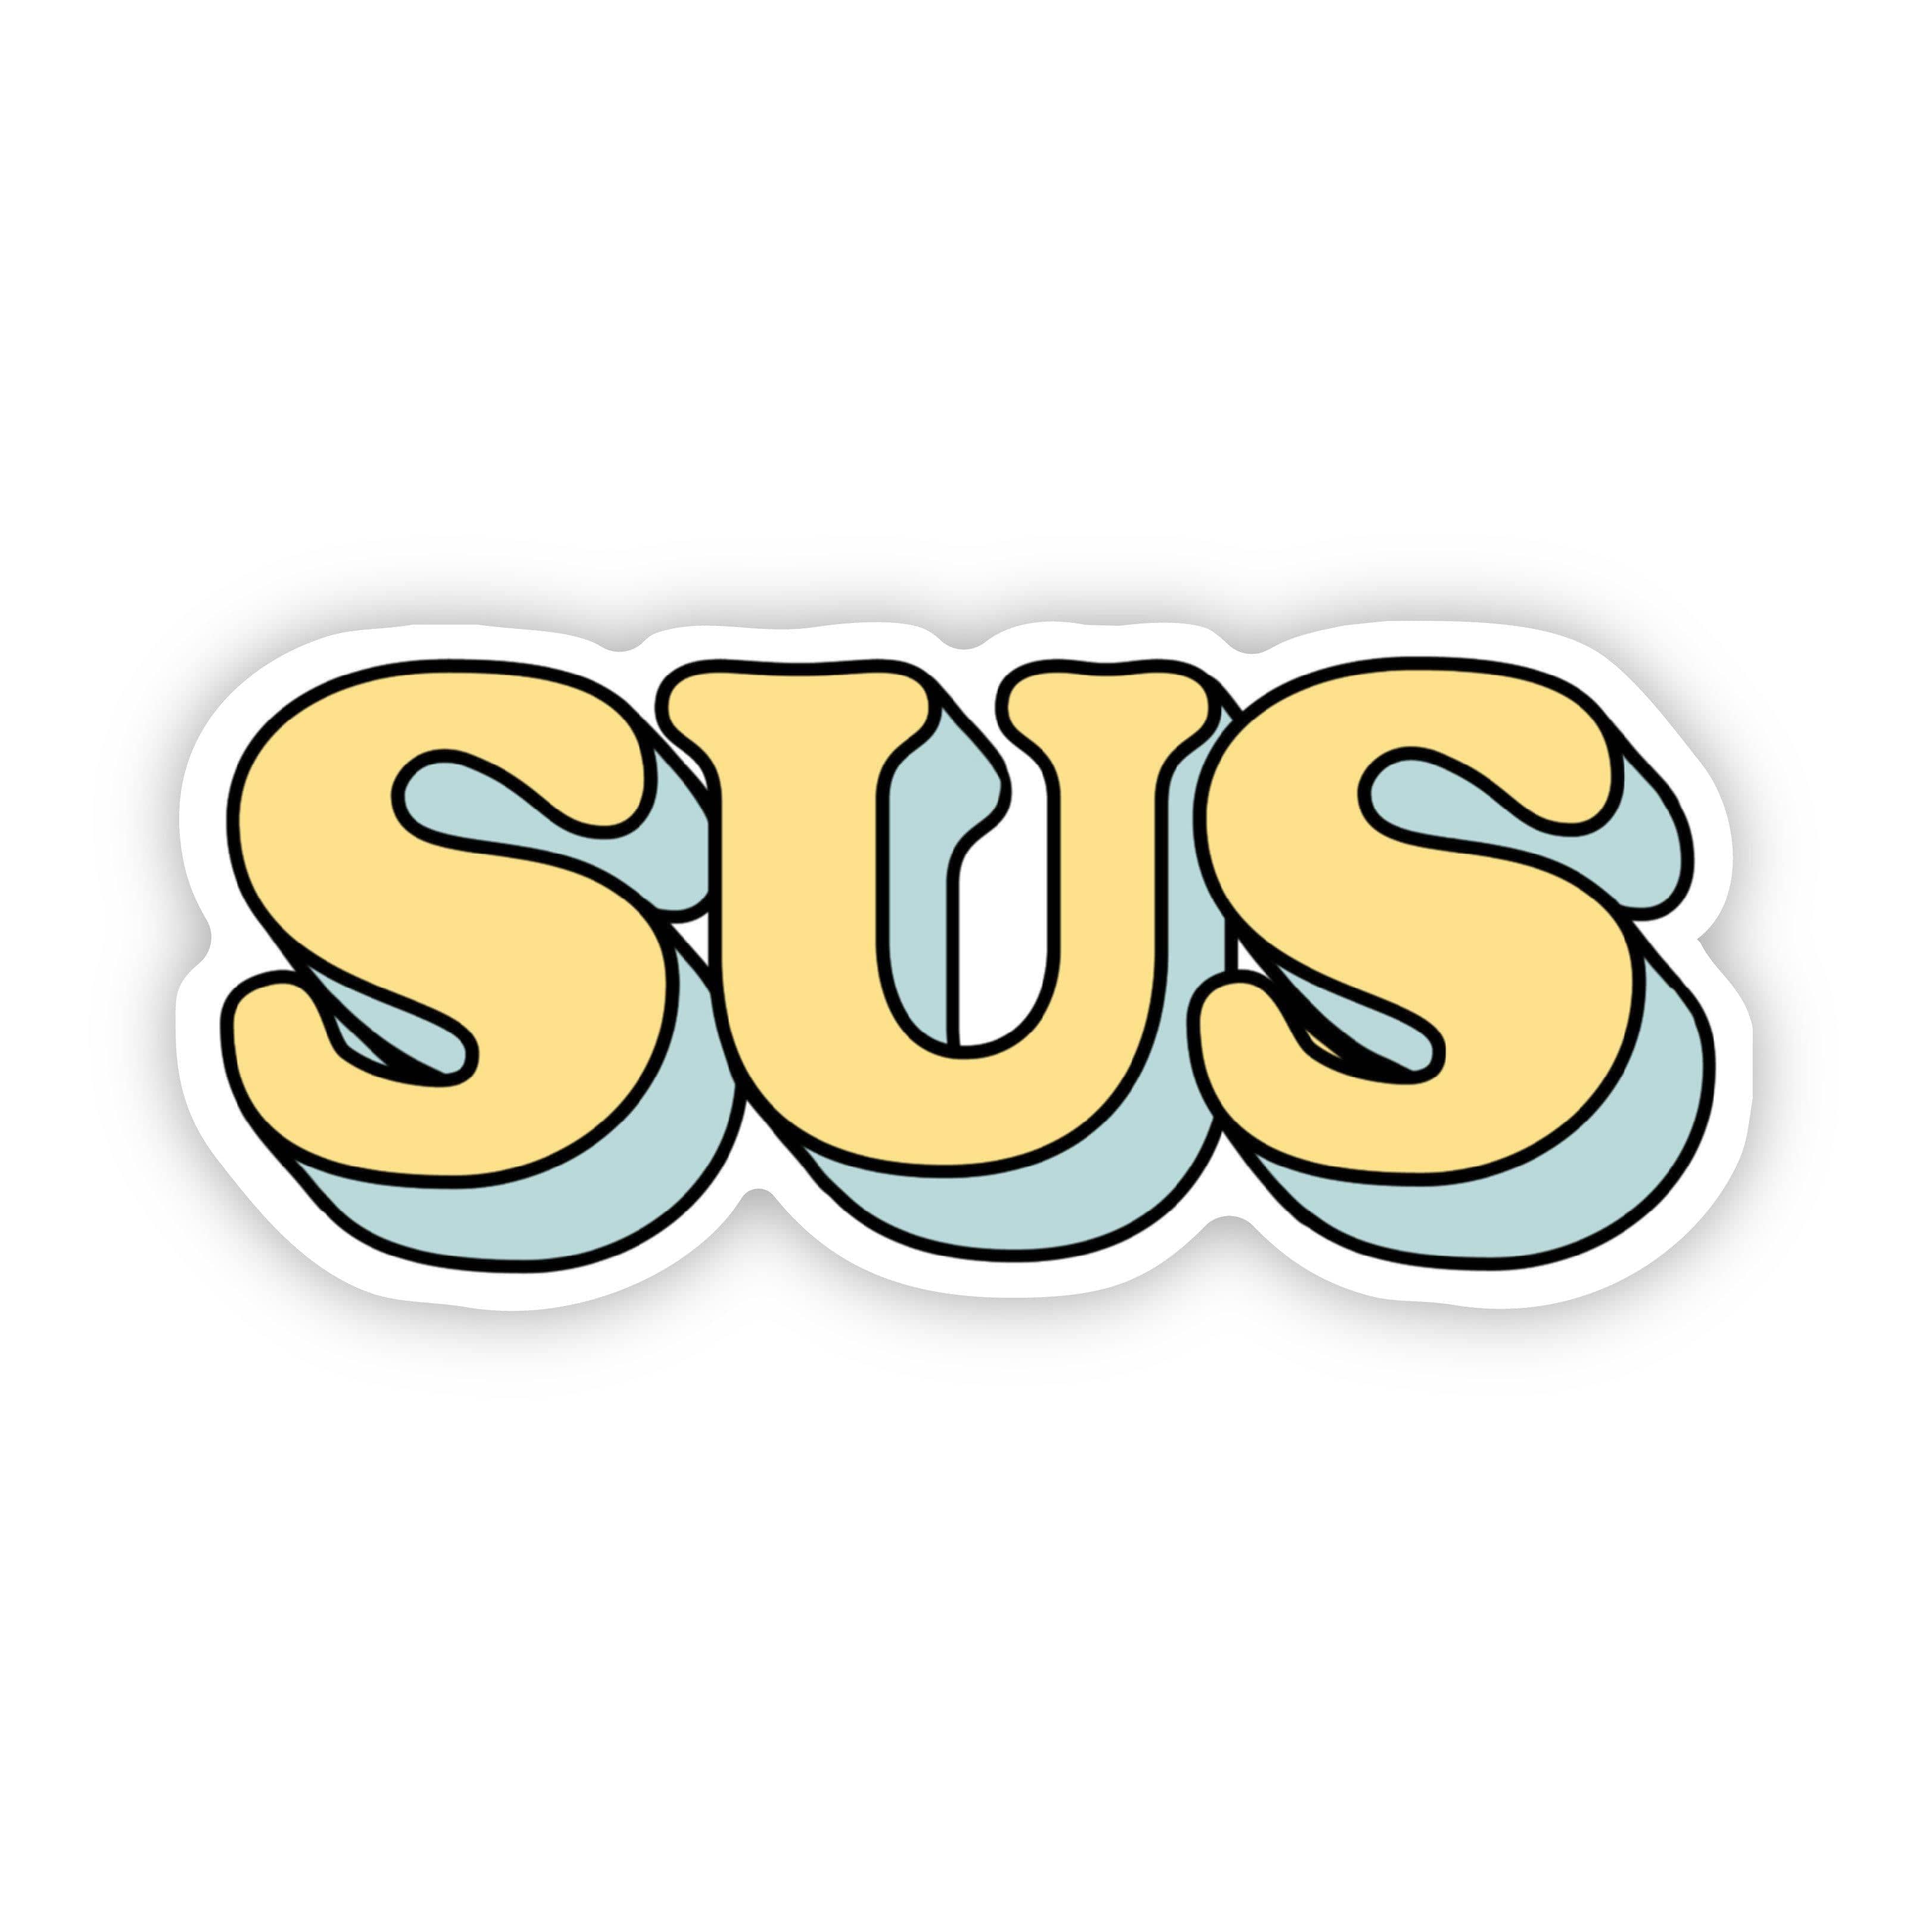 Sus Emoji Stickers for Sale